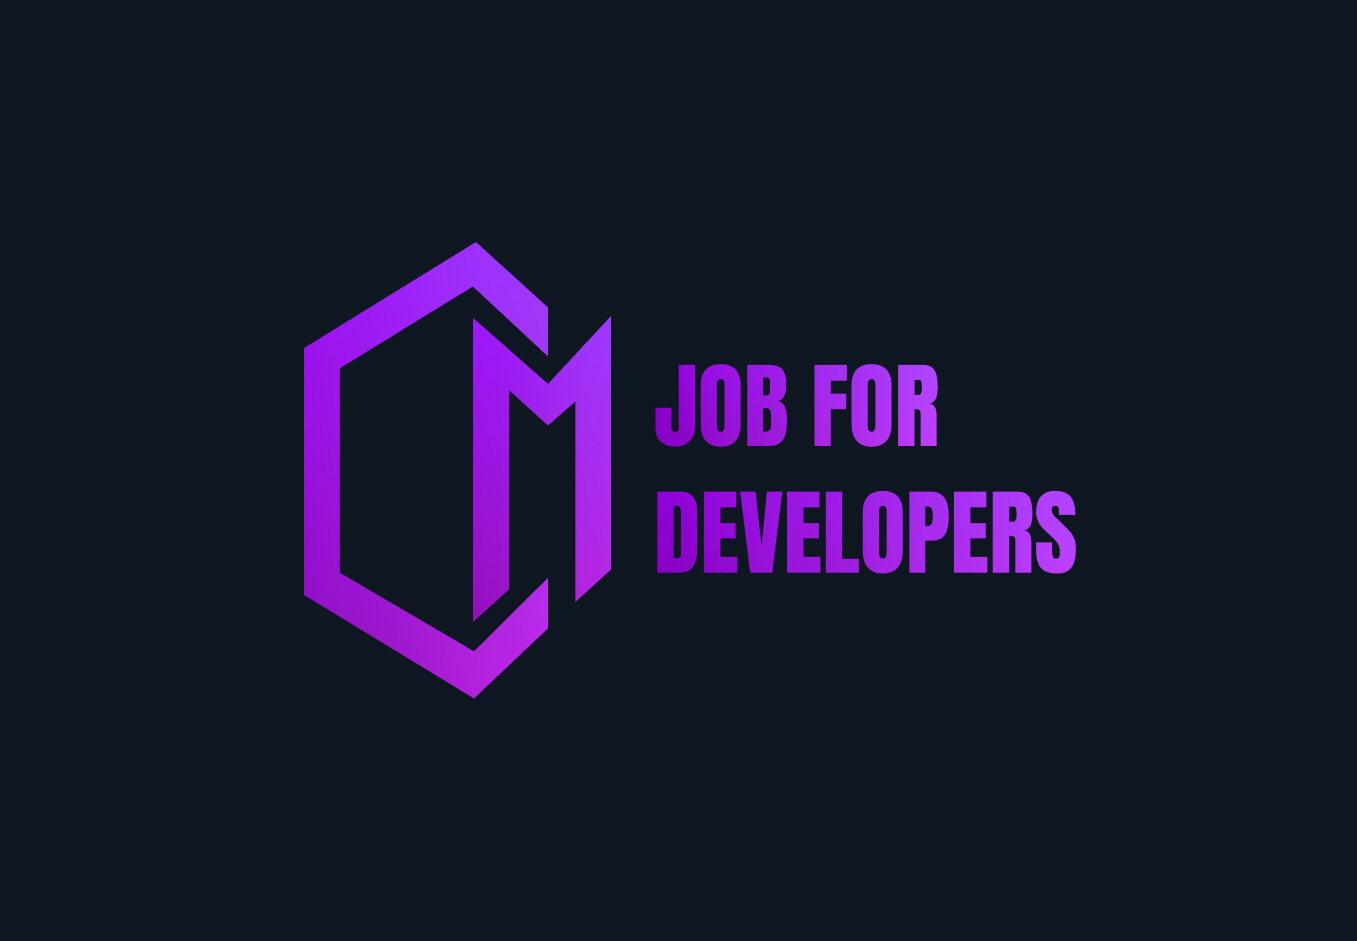 CryptoMarshall | Developer jobs - Вакансии Dev в блокчейне 